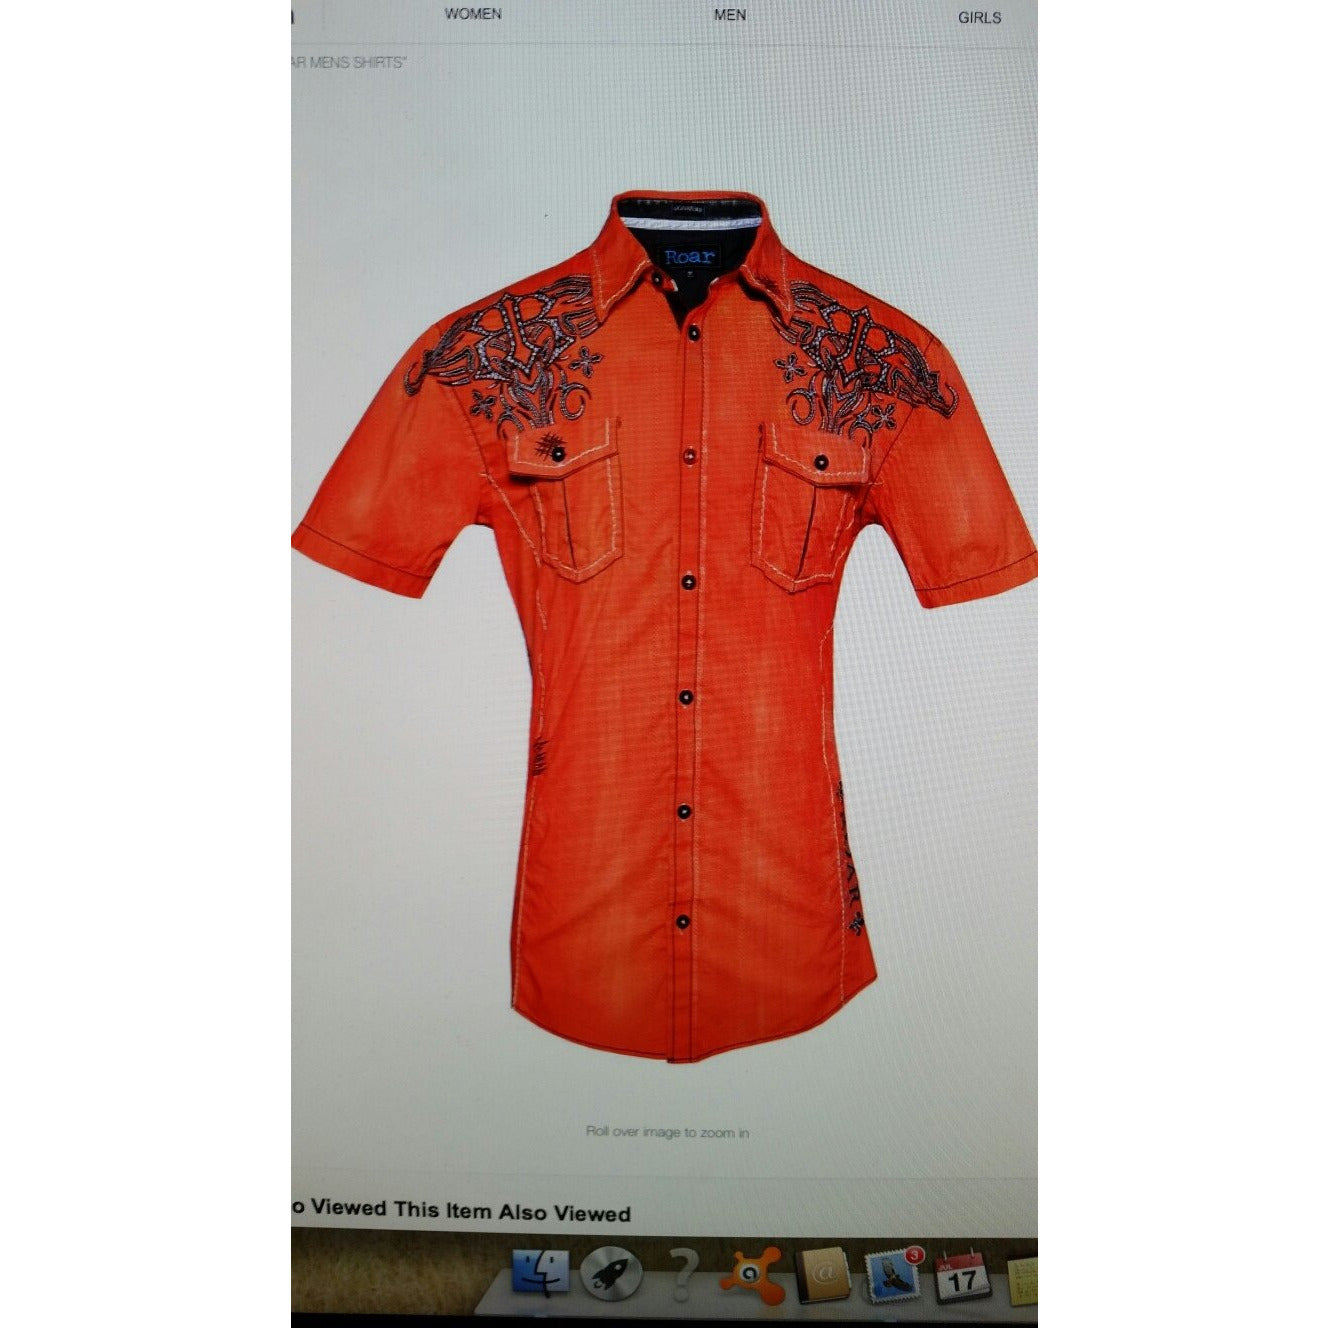 Roar Tribal Short Sleeve Orange Shirt Preowned Good Condition